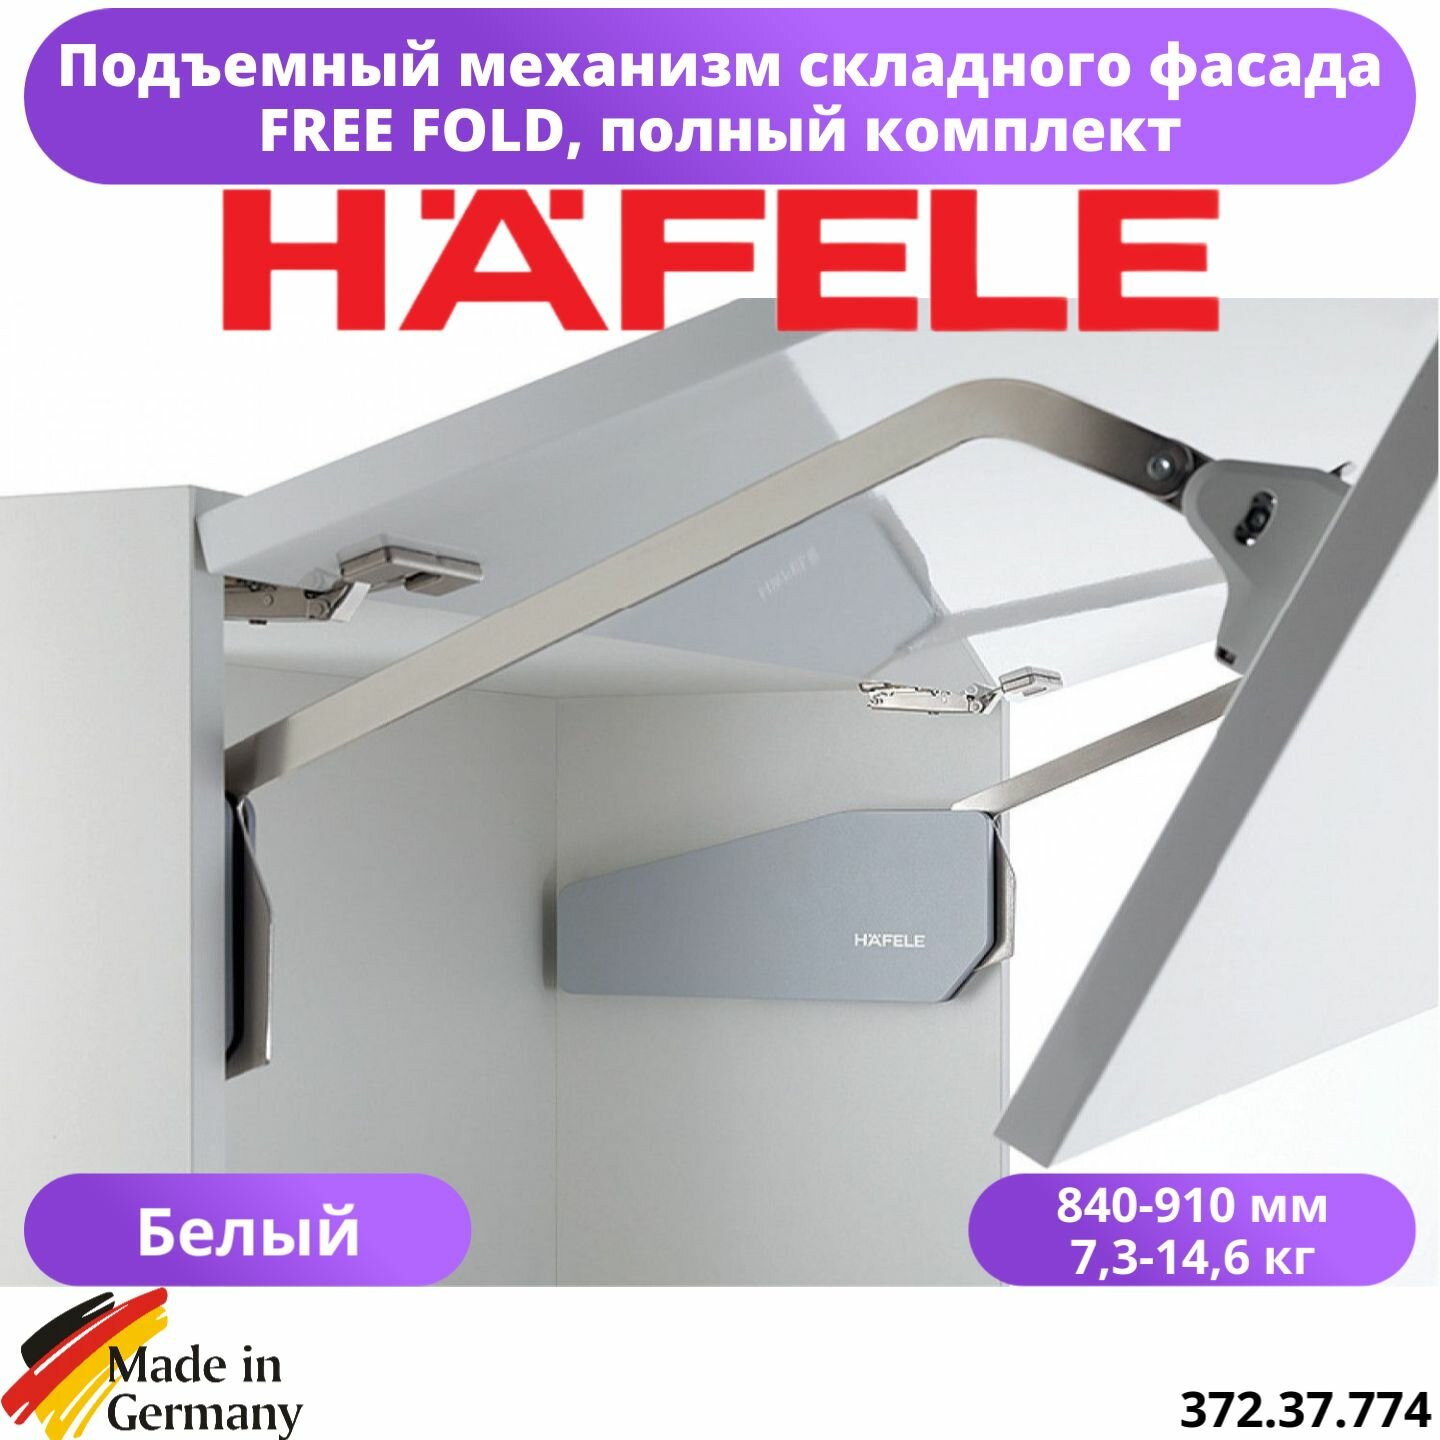 Комплект подъёмного механизма FREE FOLD для 1 шкафа, белый 840-910 (7,3-14,6кг)